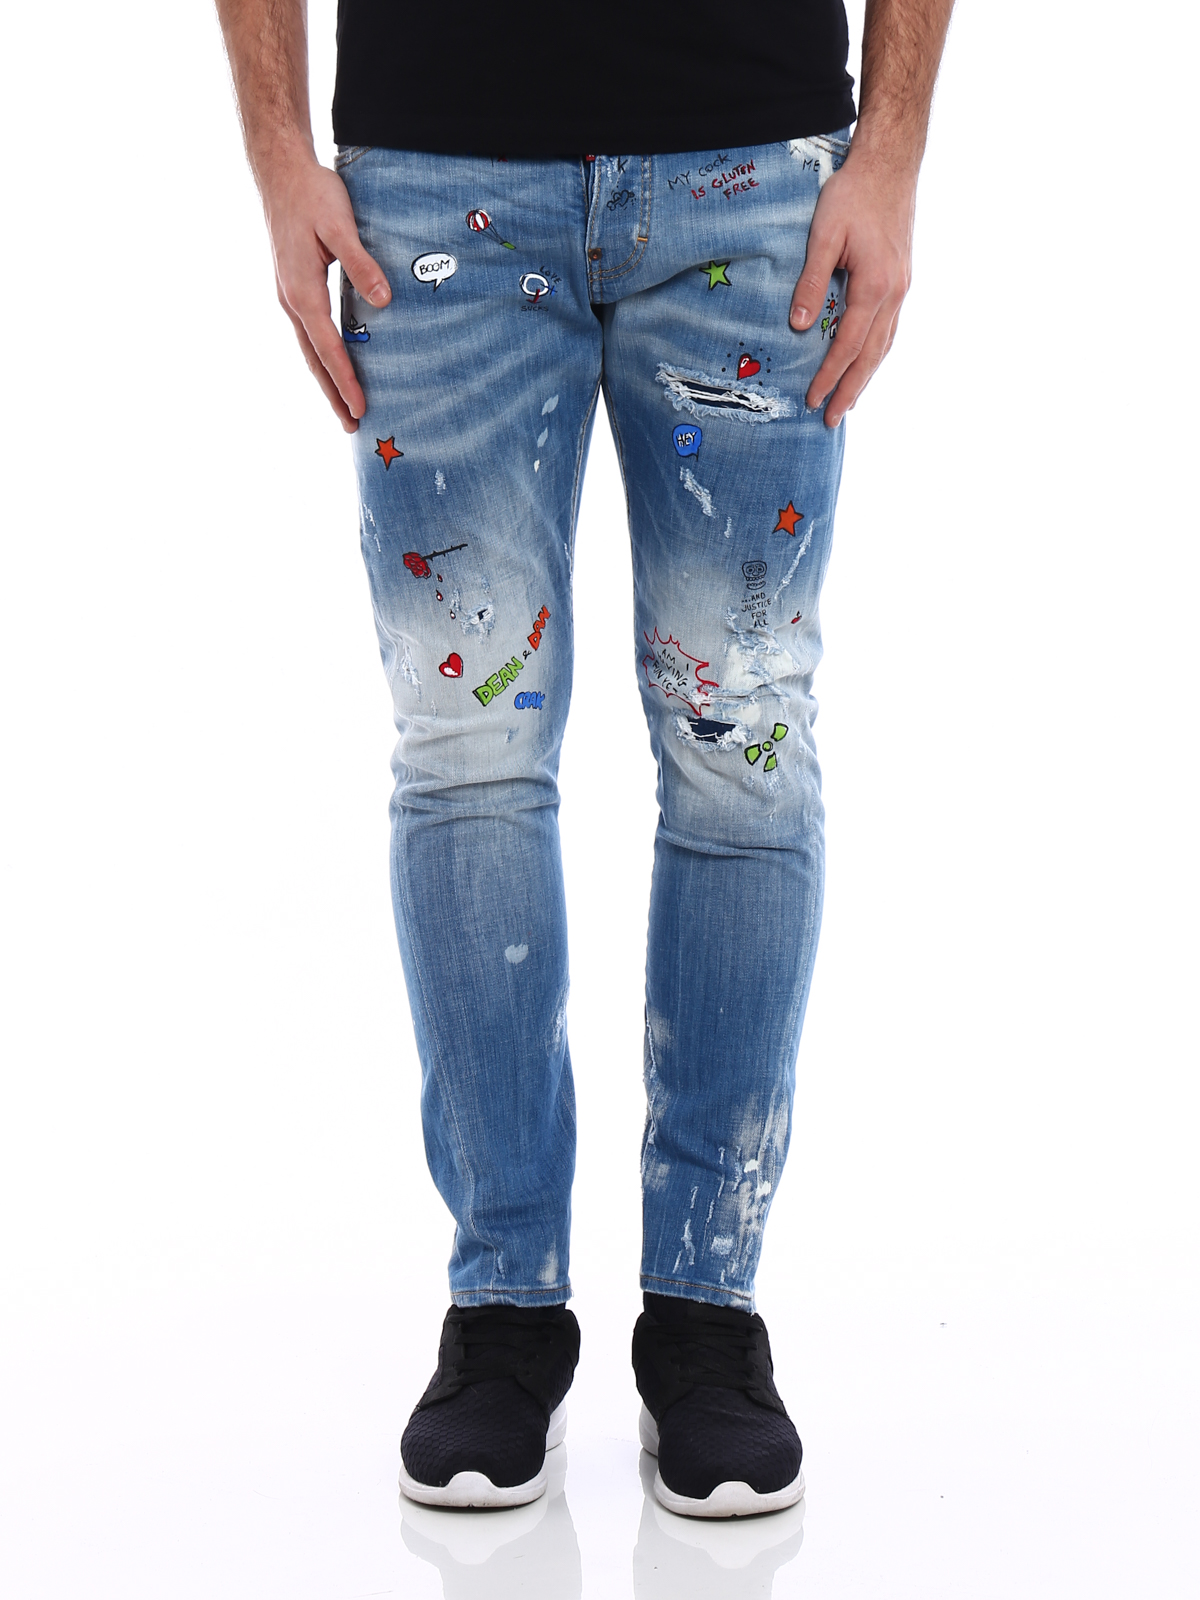 dsquared graffiti jeans